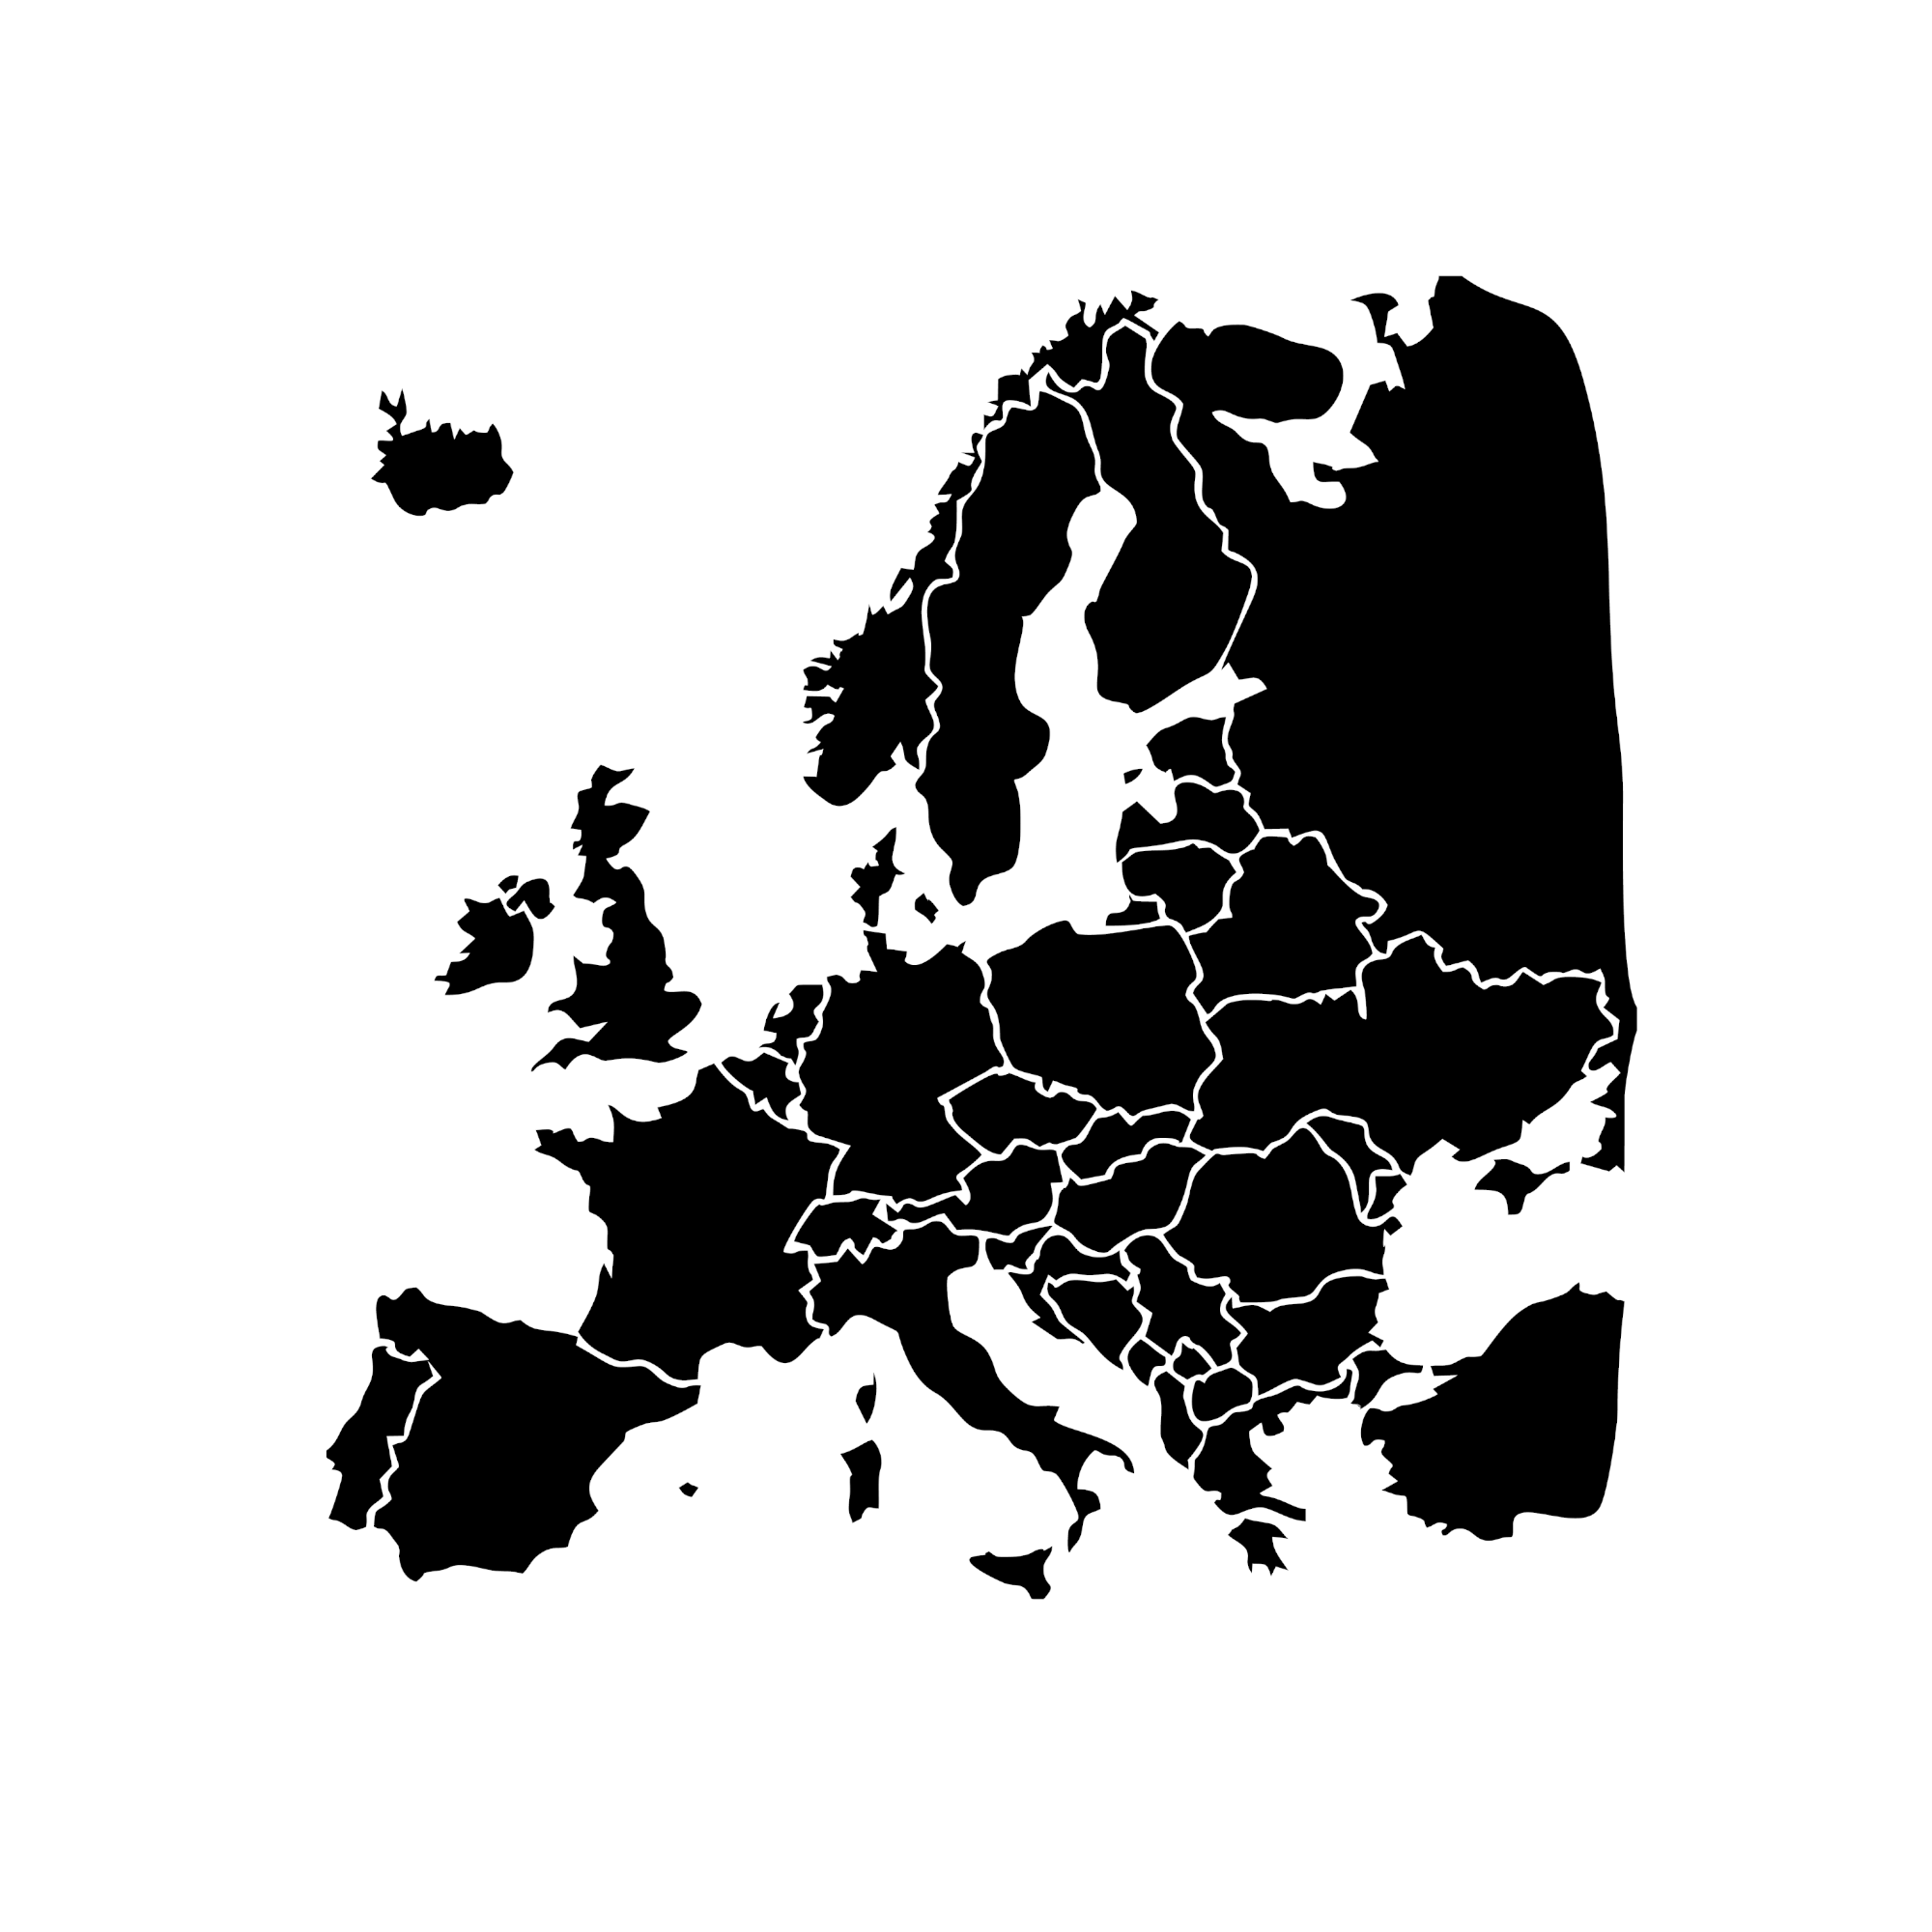 Karte Europa